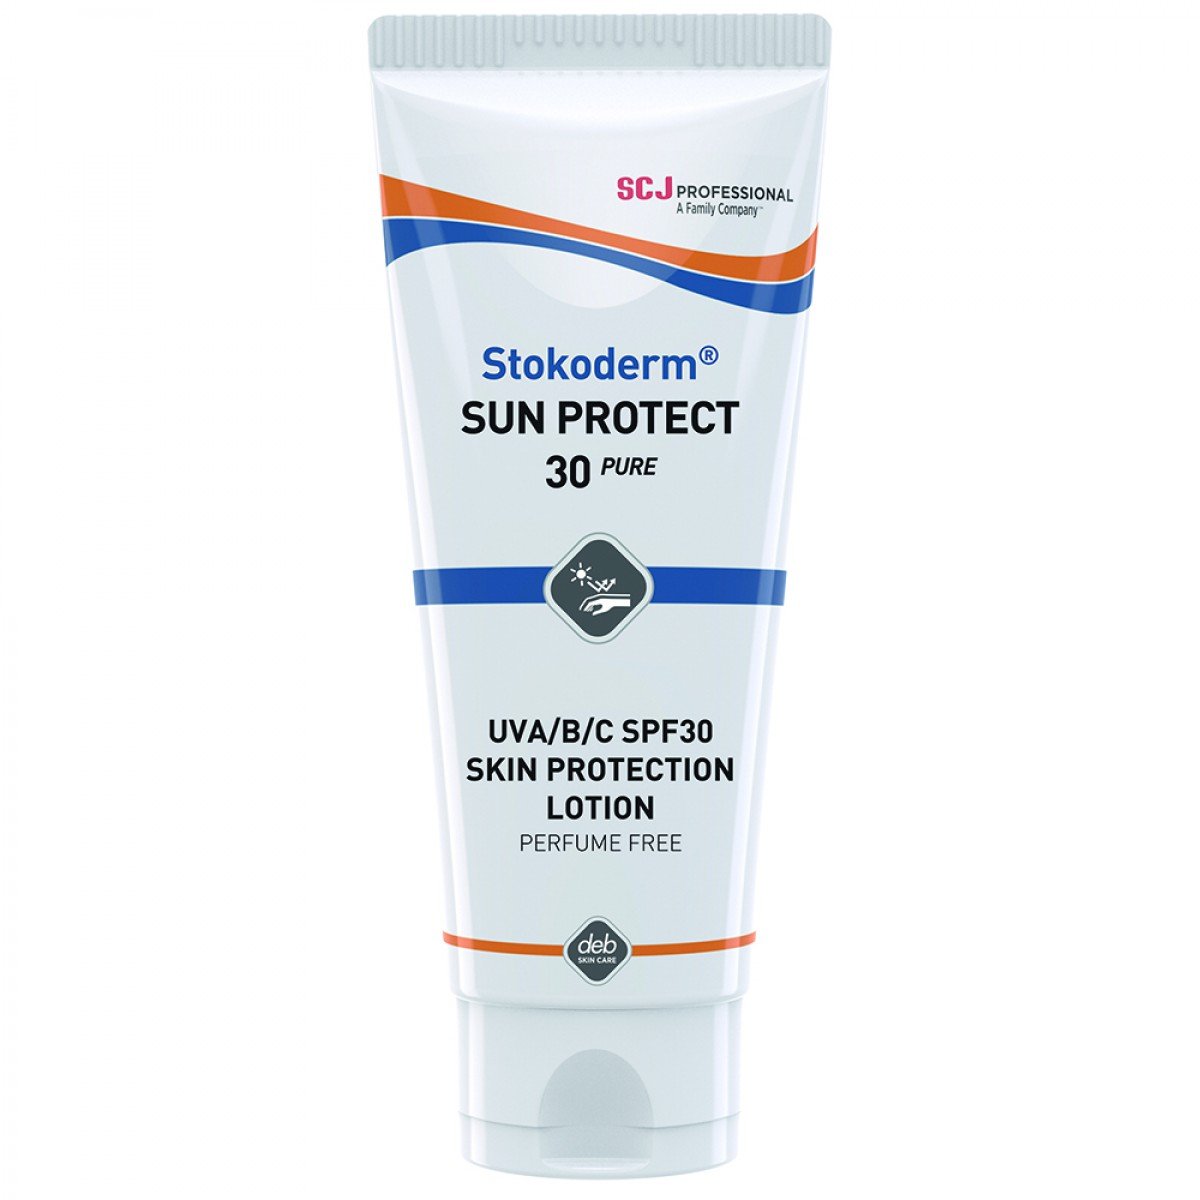 Stokoderm® Sun Protect 30 PURE Sunscreen